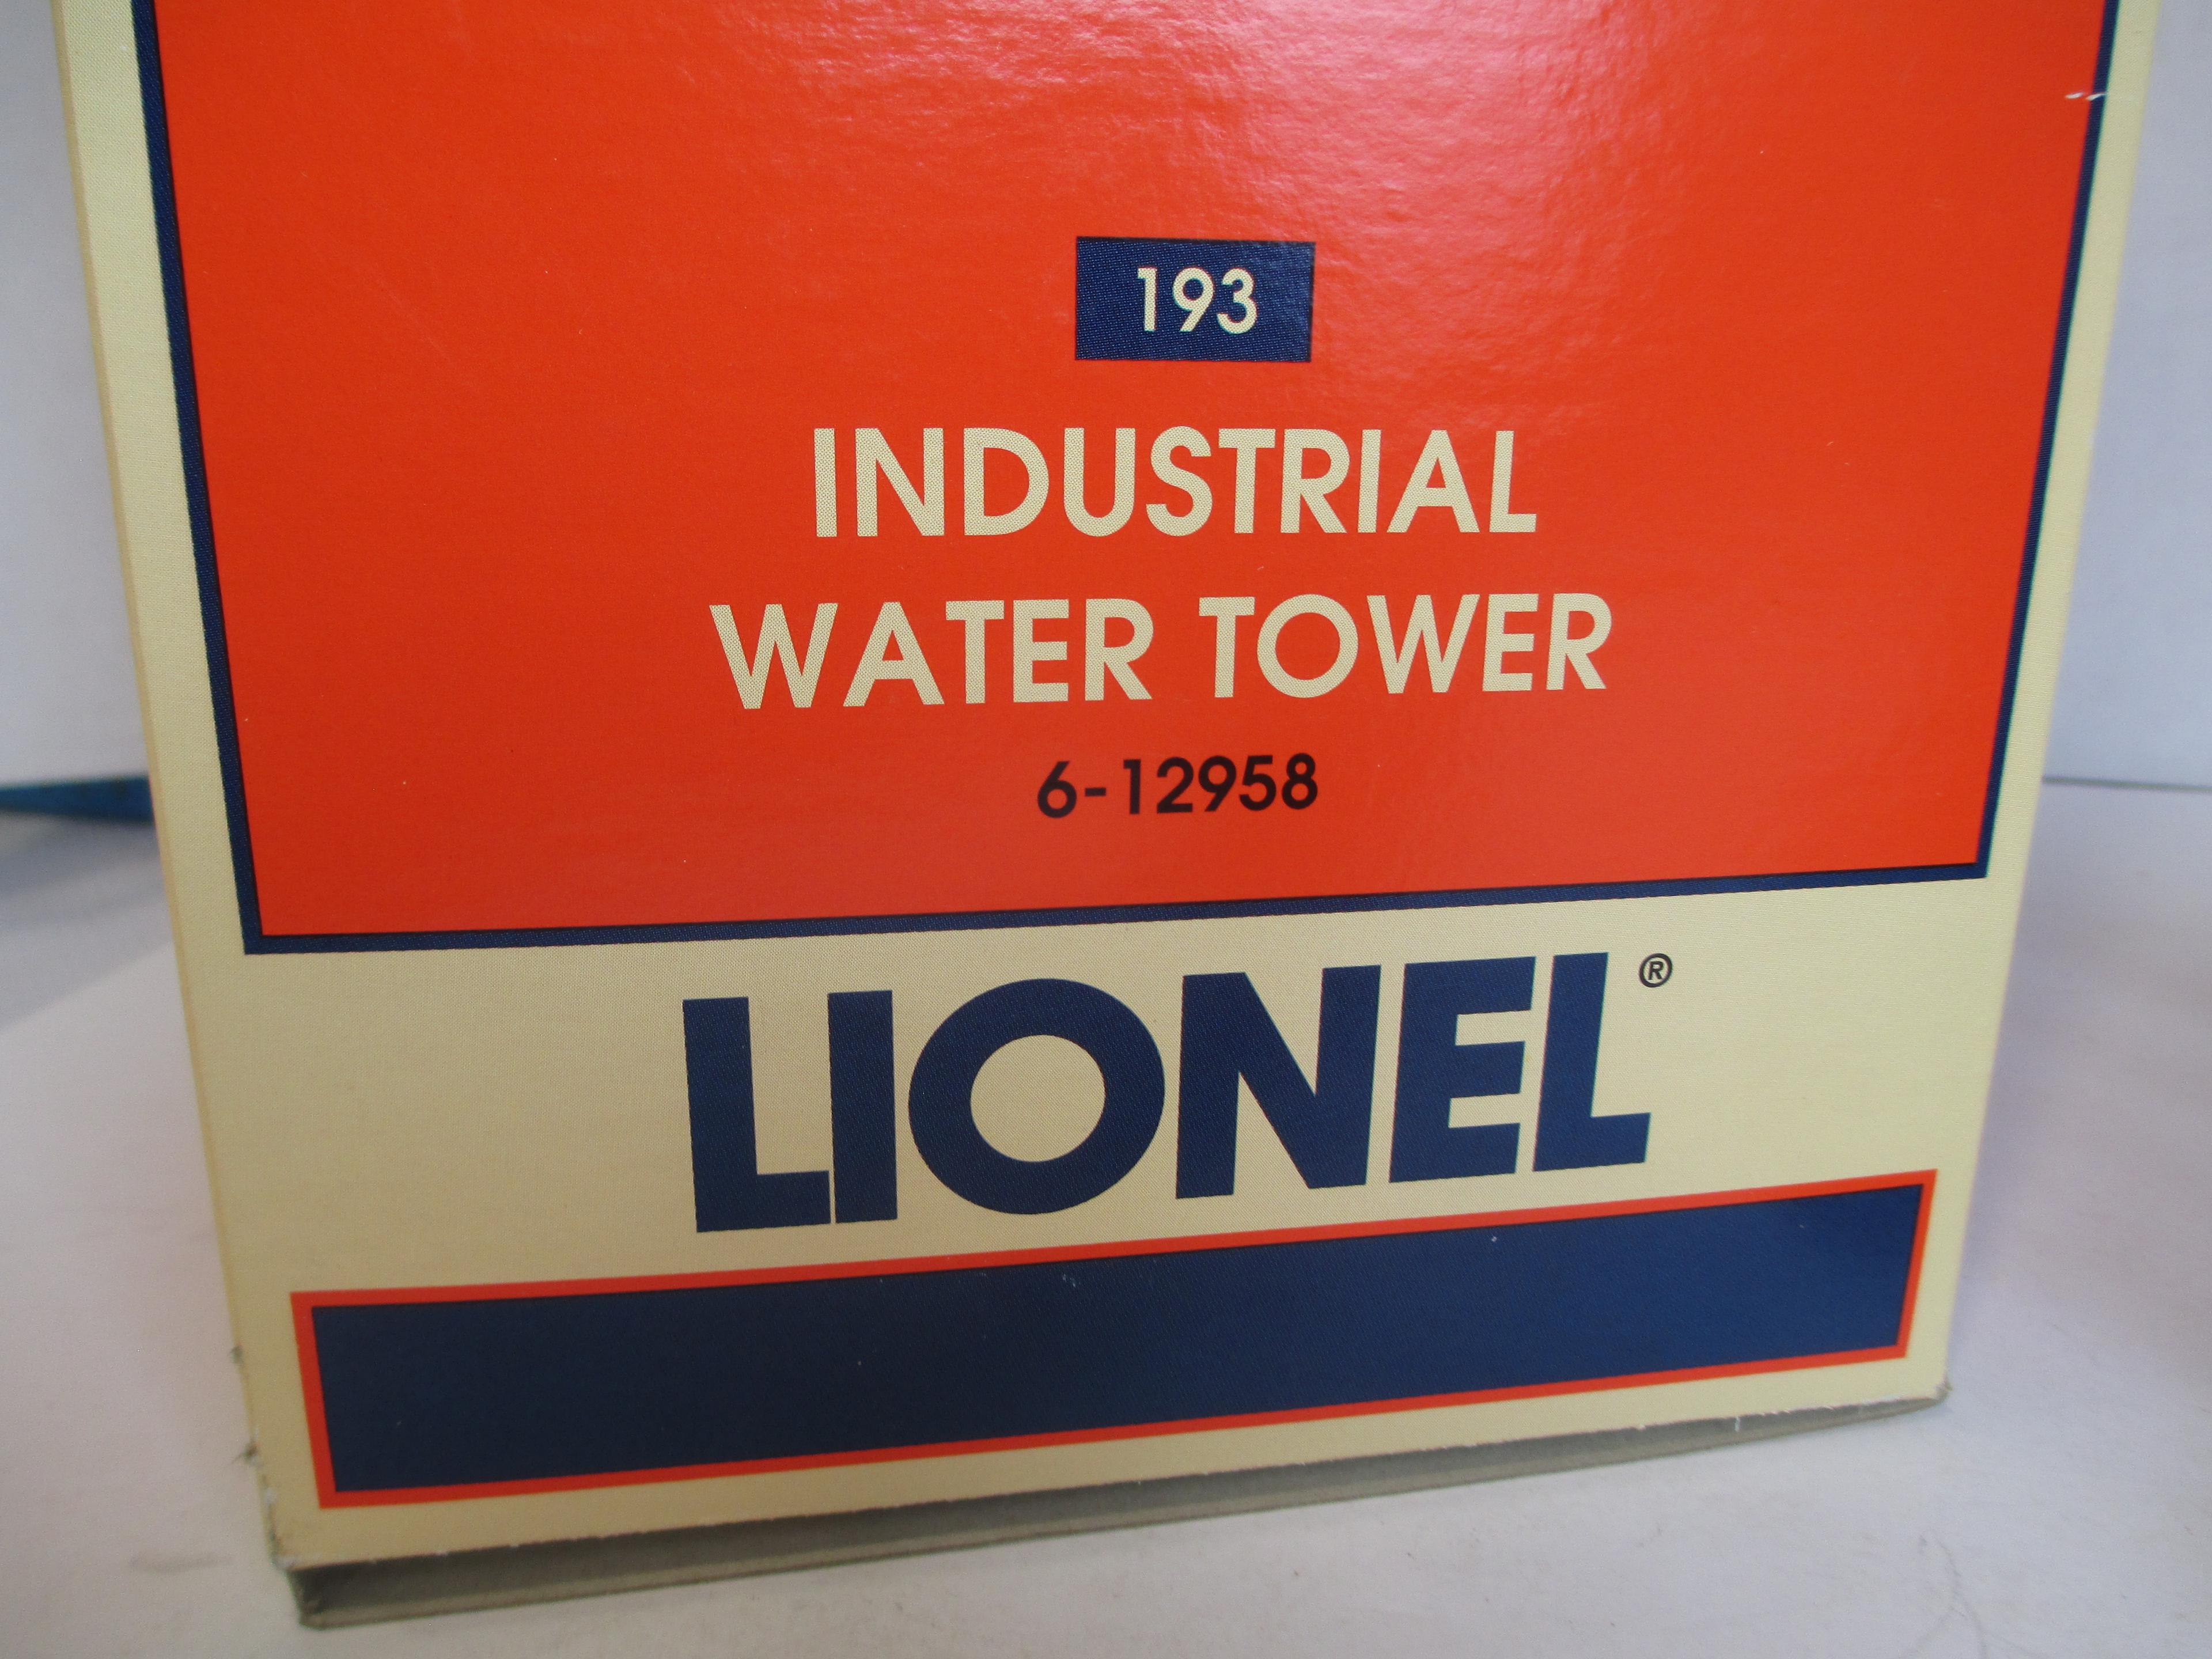 Industrial Water Tower #193